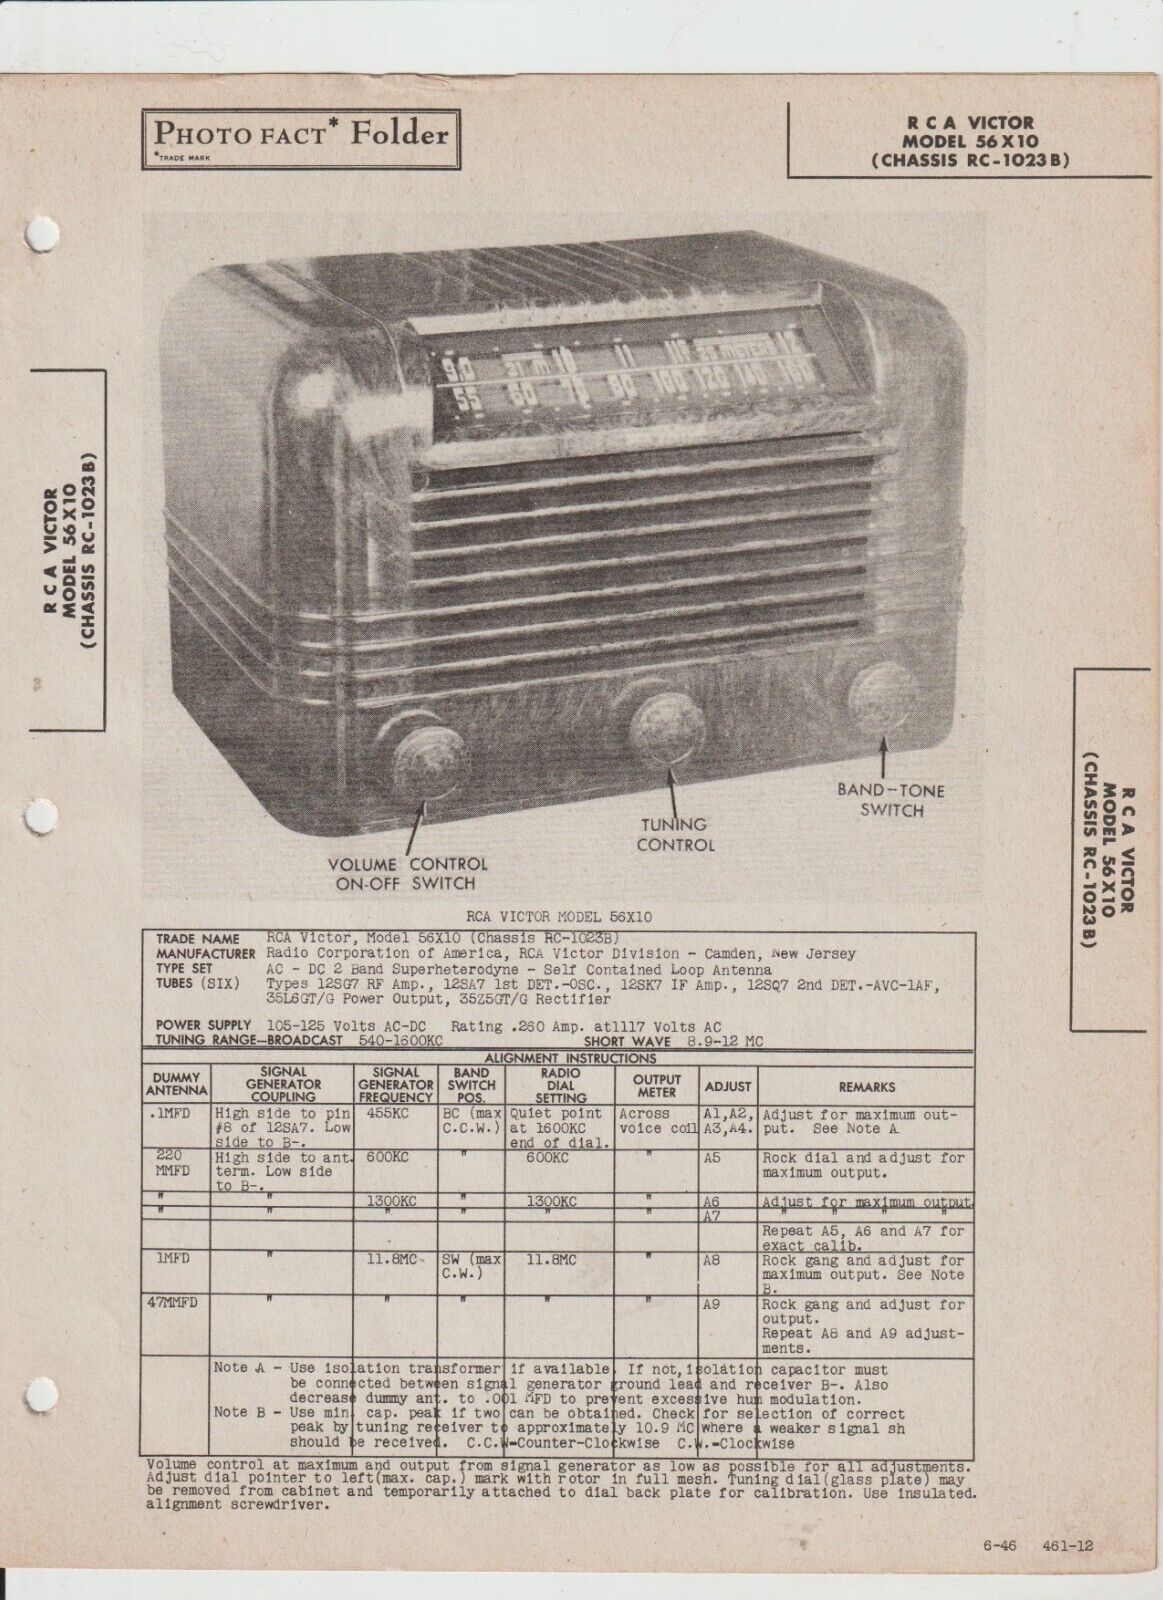 VINTAGE RCA VICTOR MODEL 56X10 RADIO - Photo Fact Folder - June 1946 A1